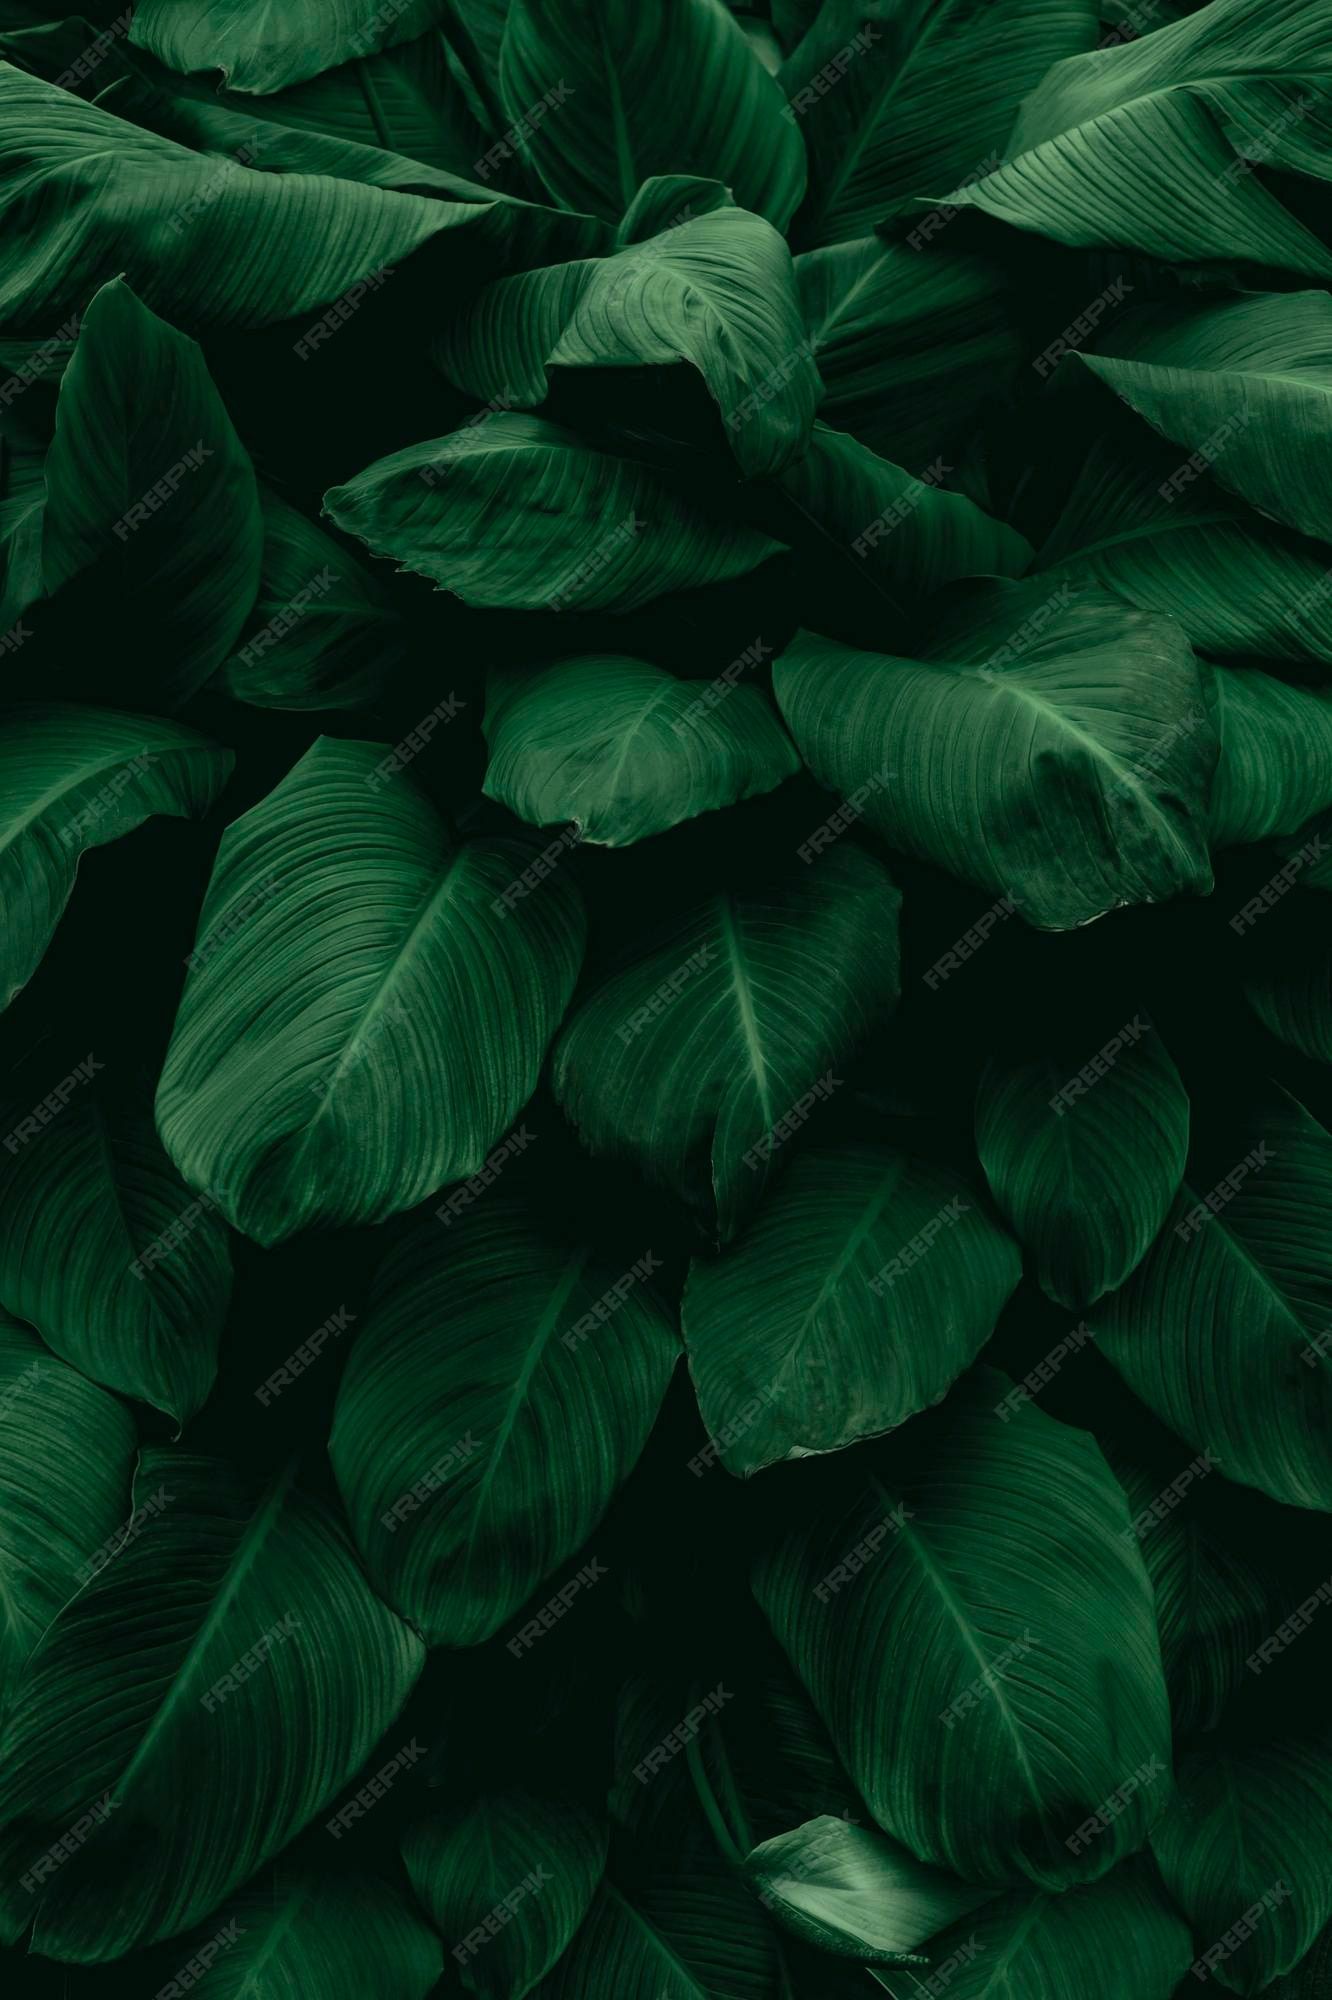 Large green leaves on a dark background - Dark green